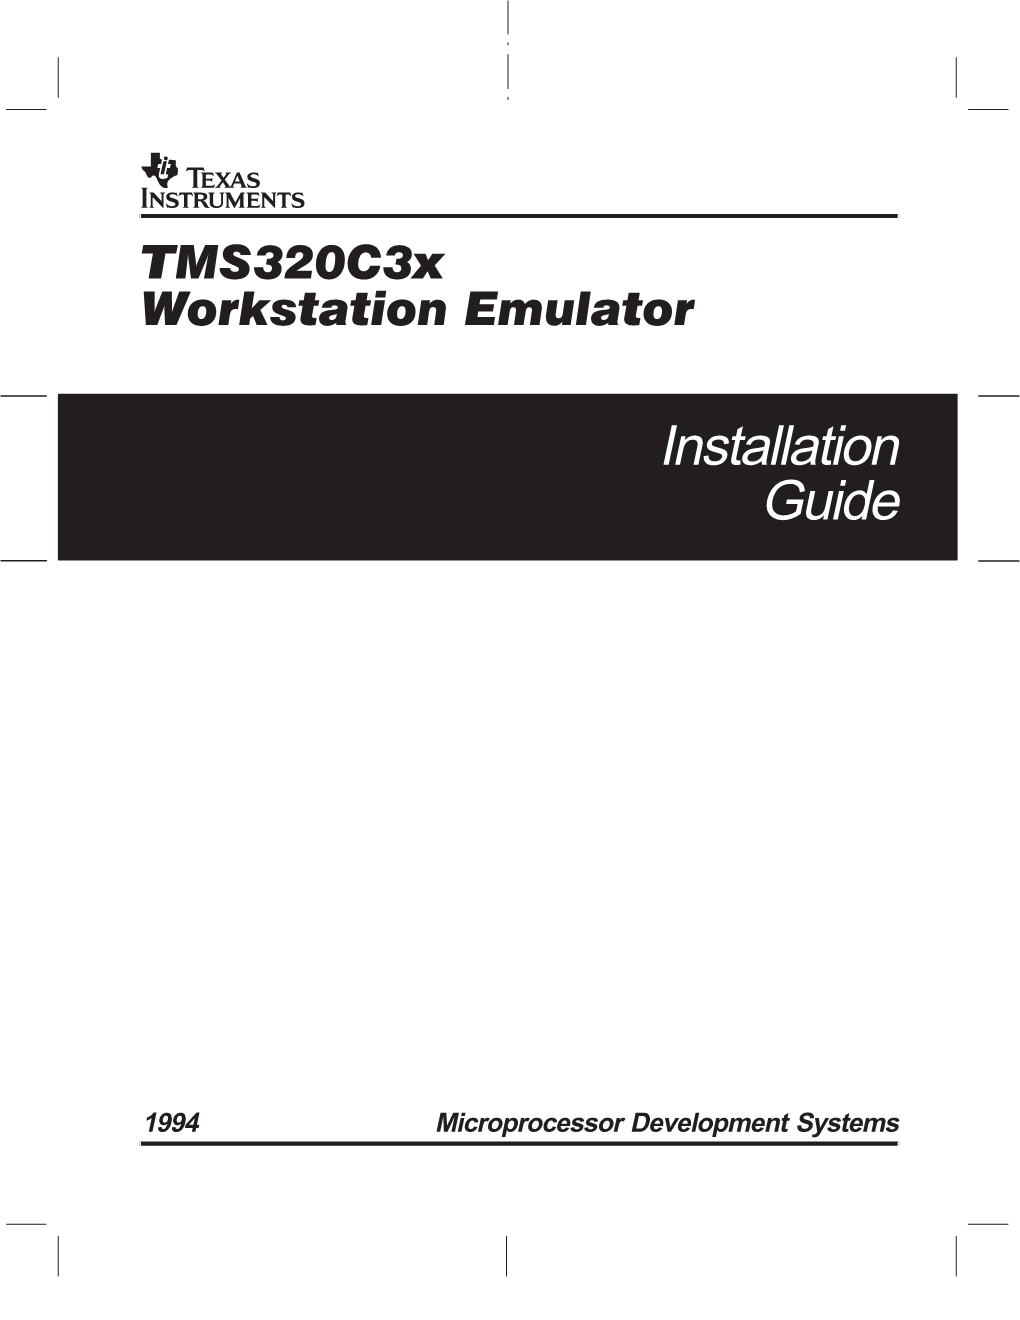 Tms320c3x Workstation Emulator Installation Guide